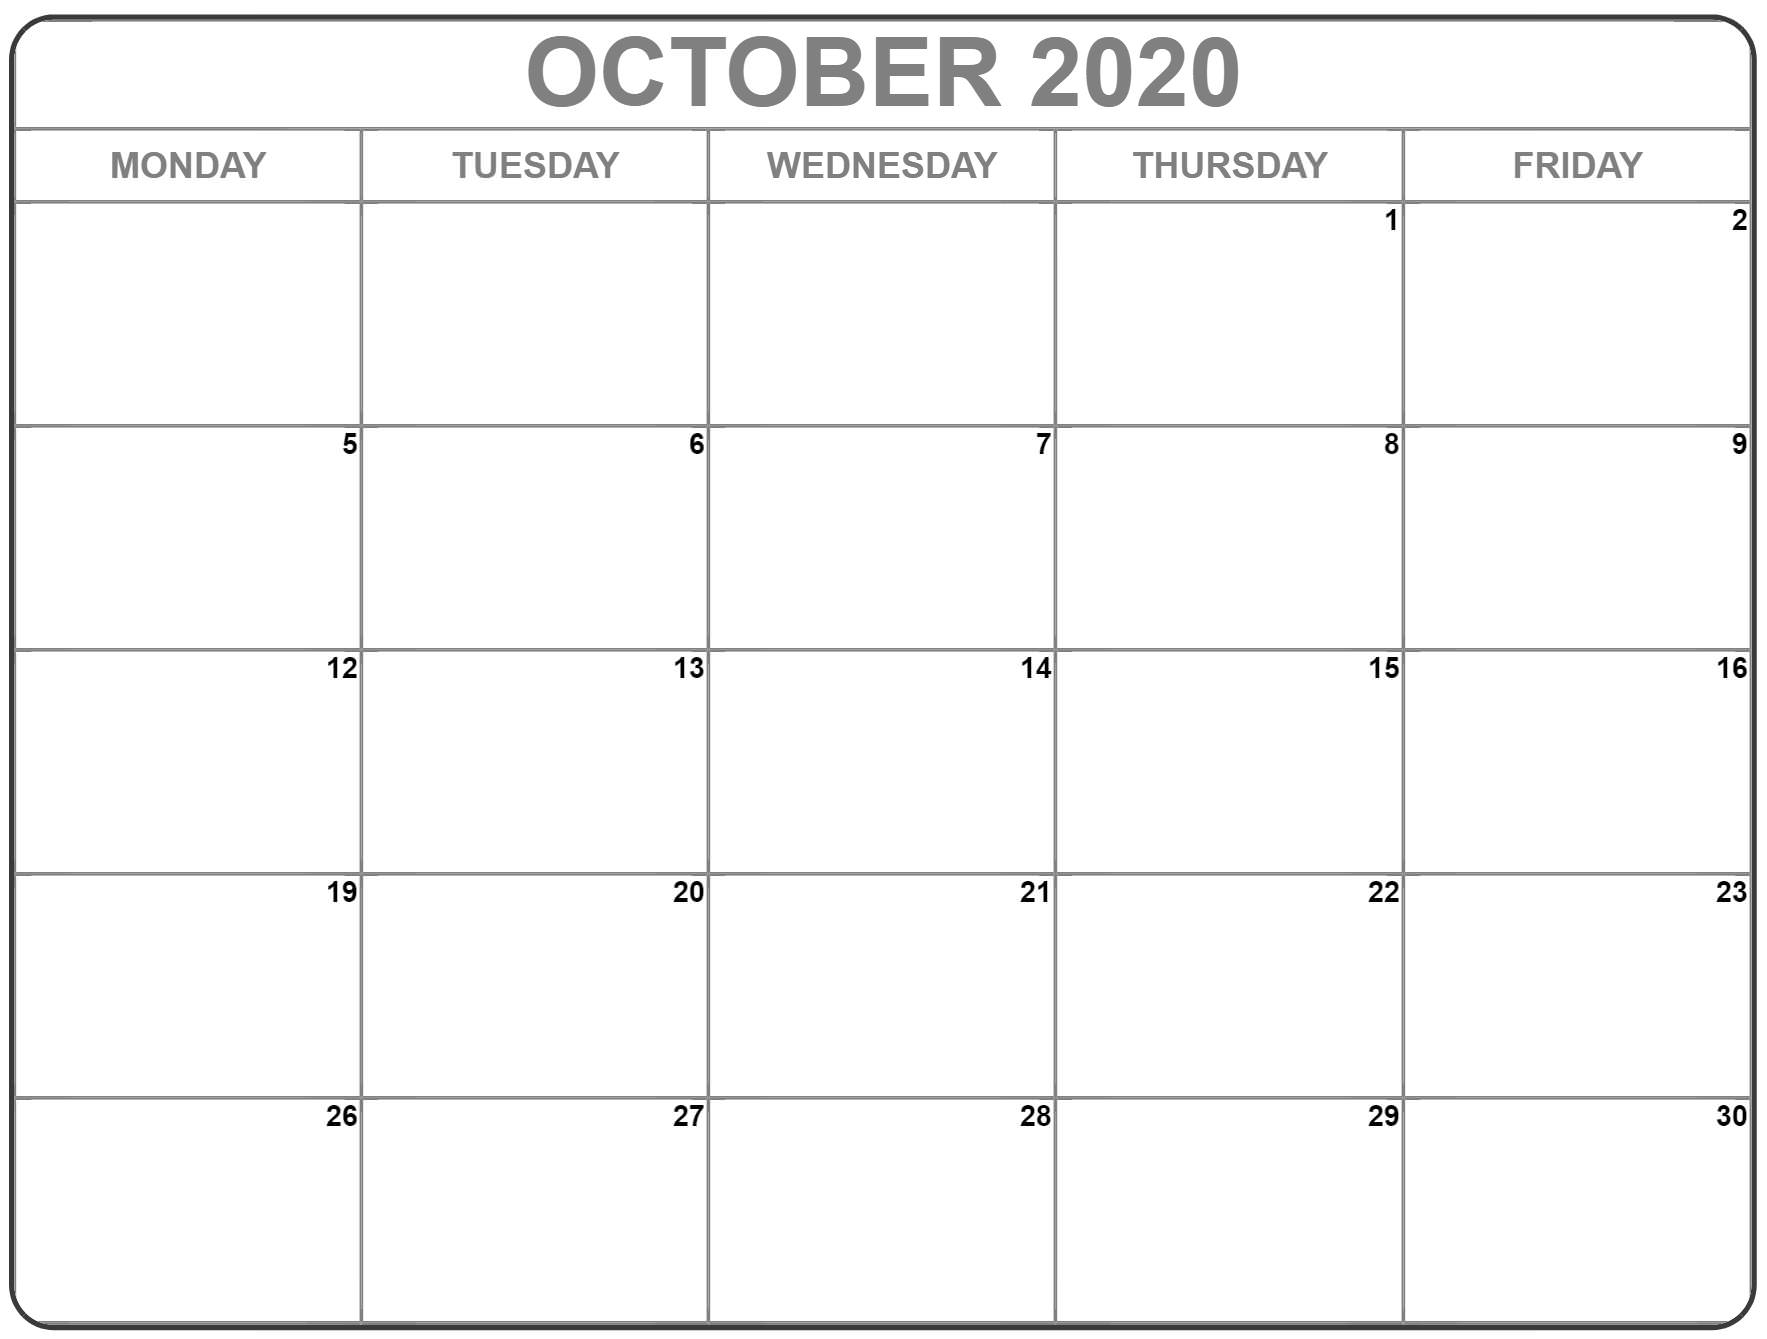 October 2020 Monday Calendar | Monday To Sunday